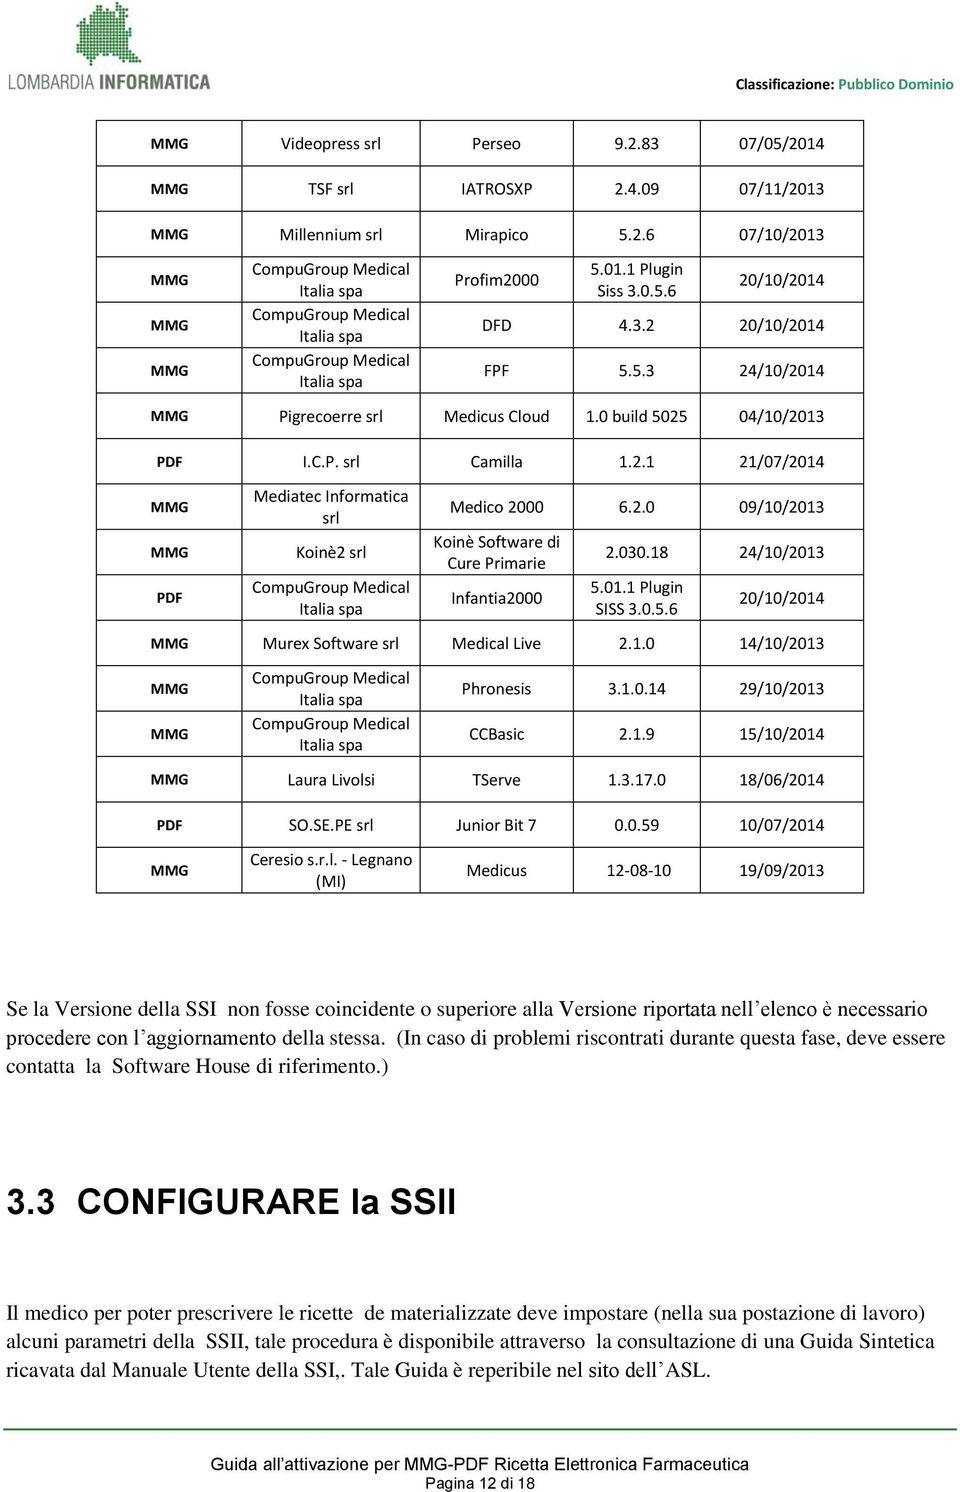 2.0 09/10/2013 Koinè Software di Cure Primarie Infantia2000 2.030.18 24/10/2013 5.01.1 Plugin SISS 3.0.5.6 20/10/2014 Murex Software srl Medical Live 2.1.0 14/10/2013 CompuGroup Medical Italia spa CompuGroup Medical Italia spa Phronesis 3.